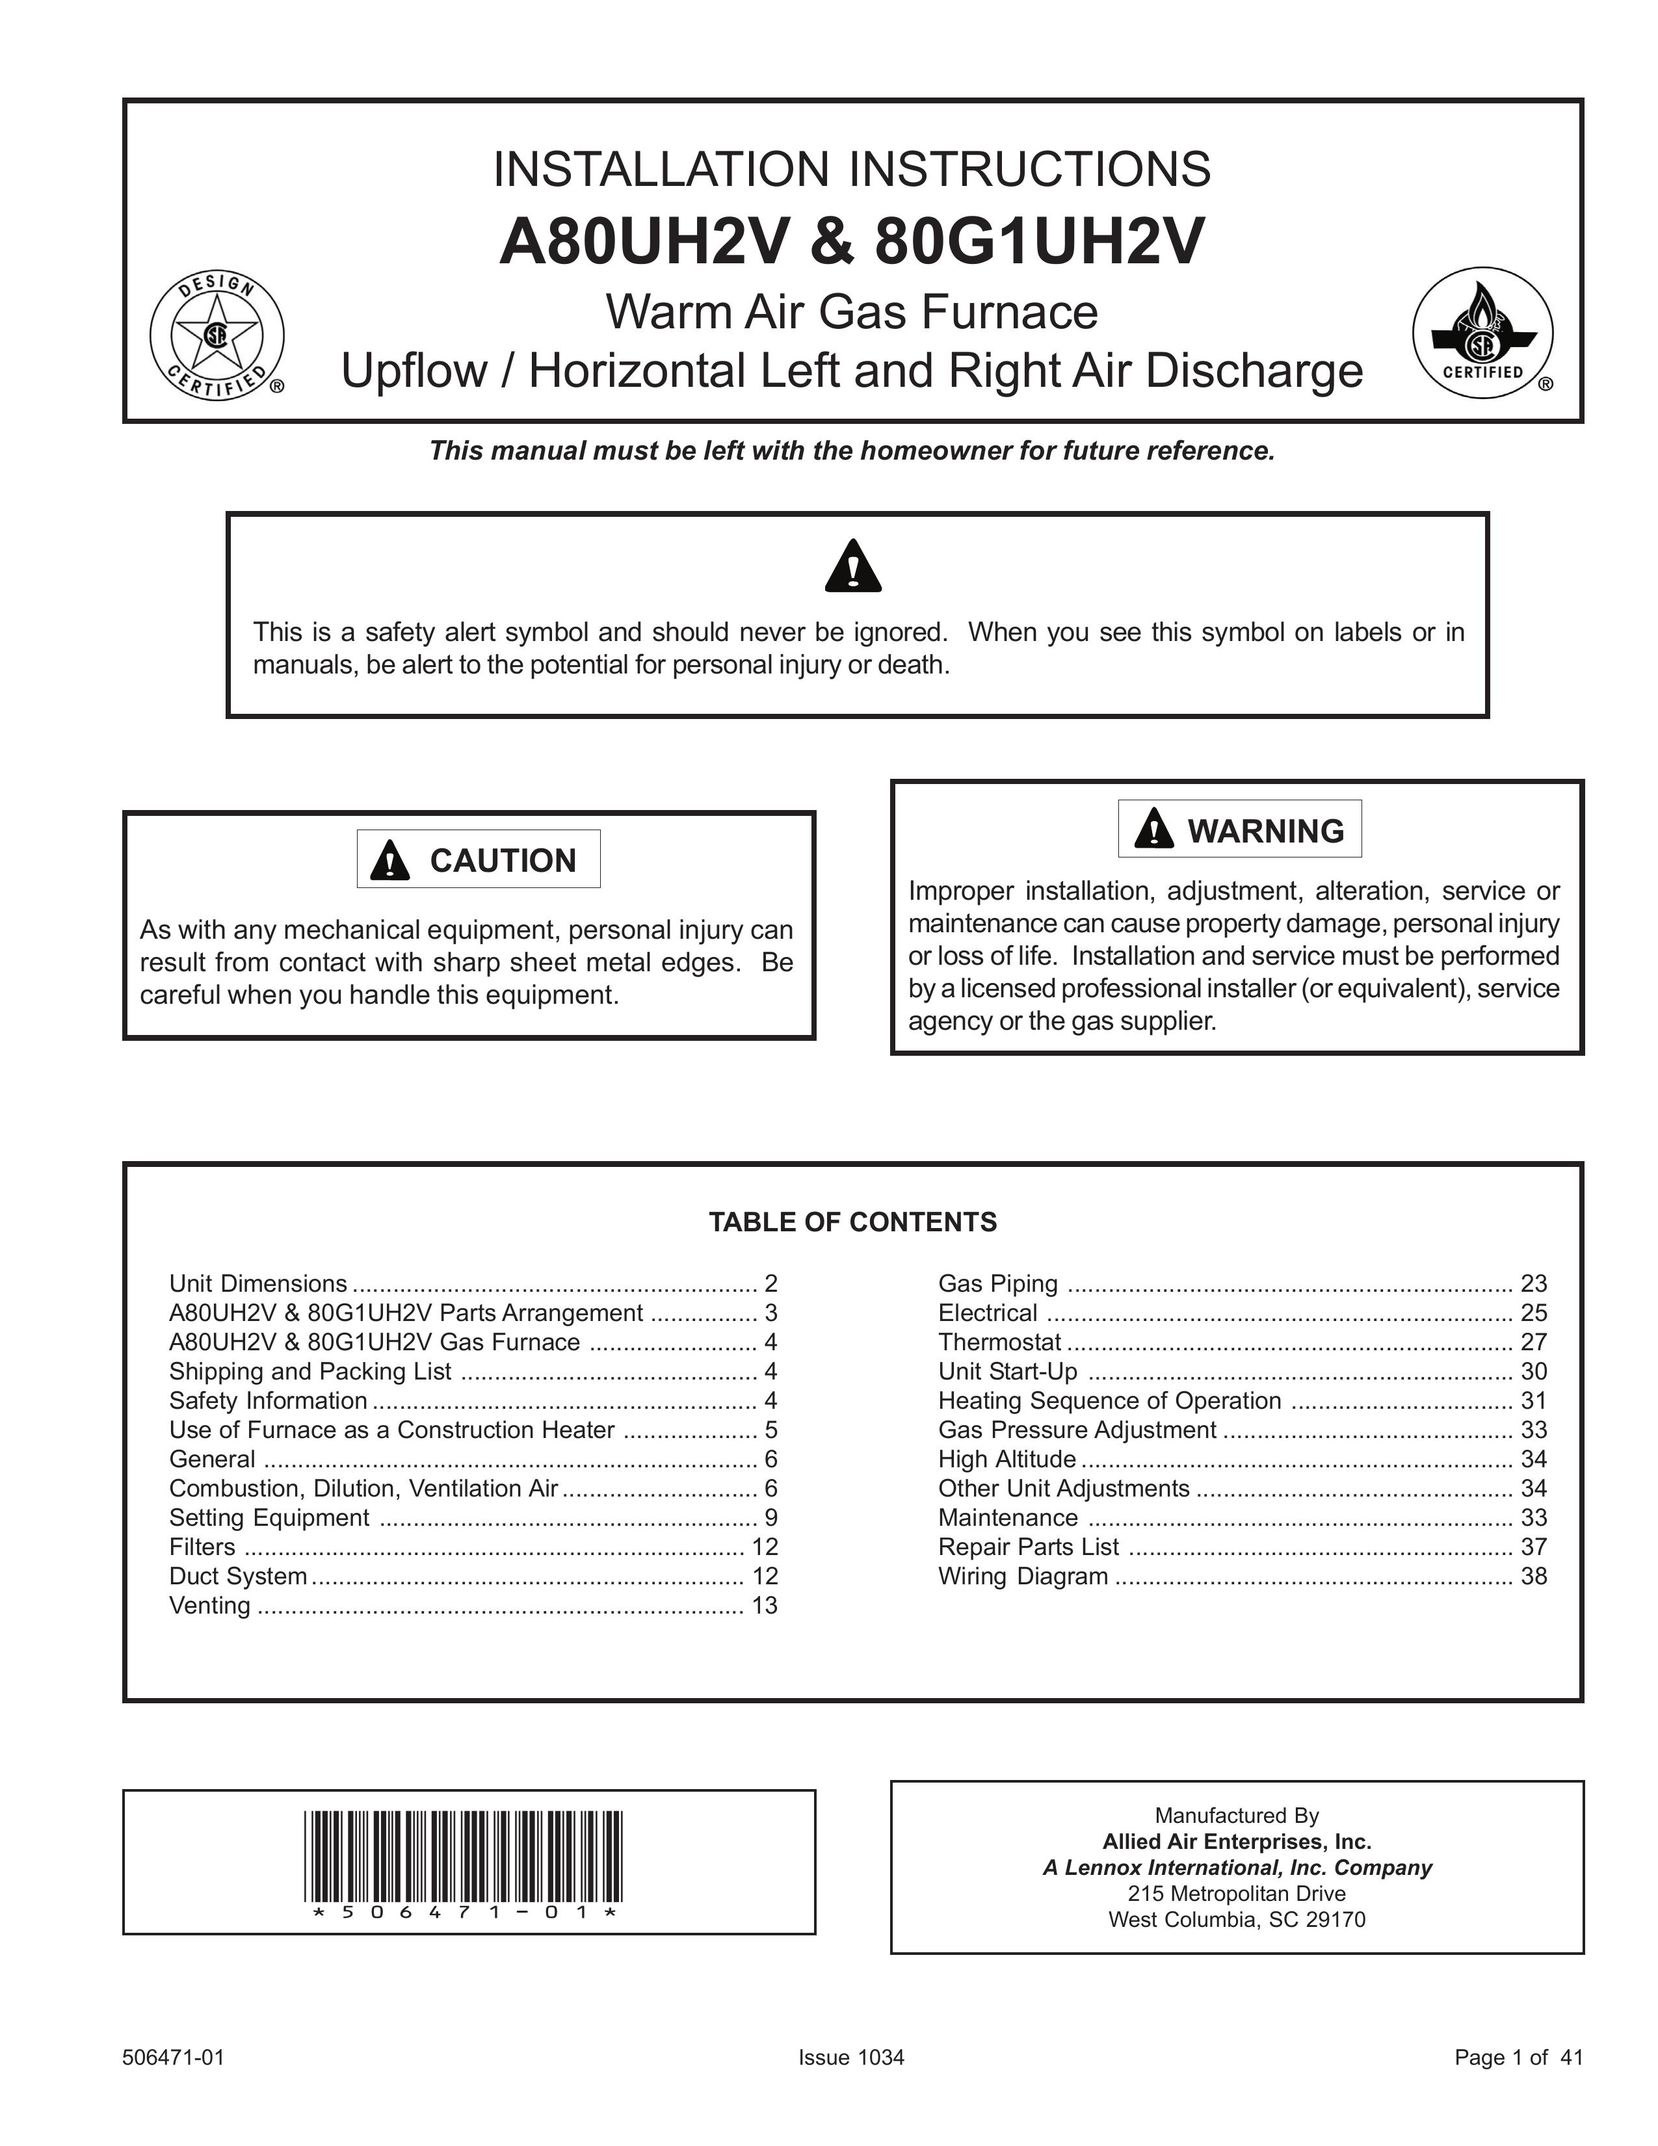 Allied Air Enterprises 80G1UH2V Furnace User Manual